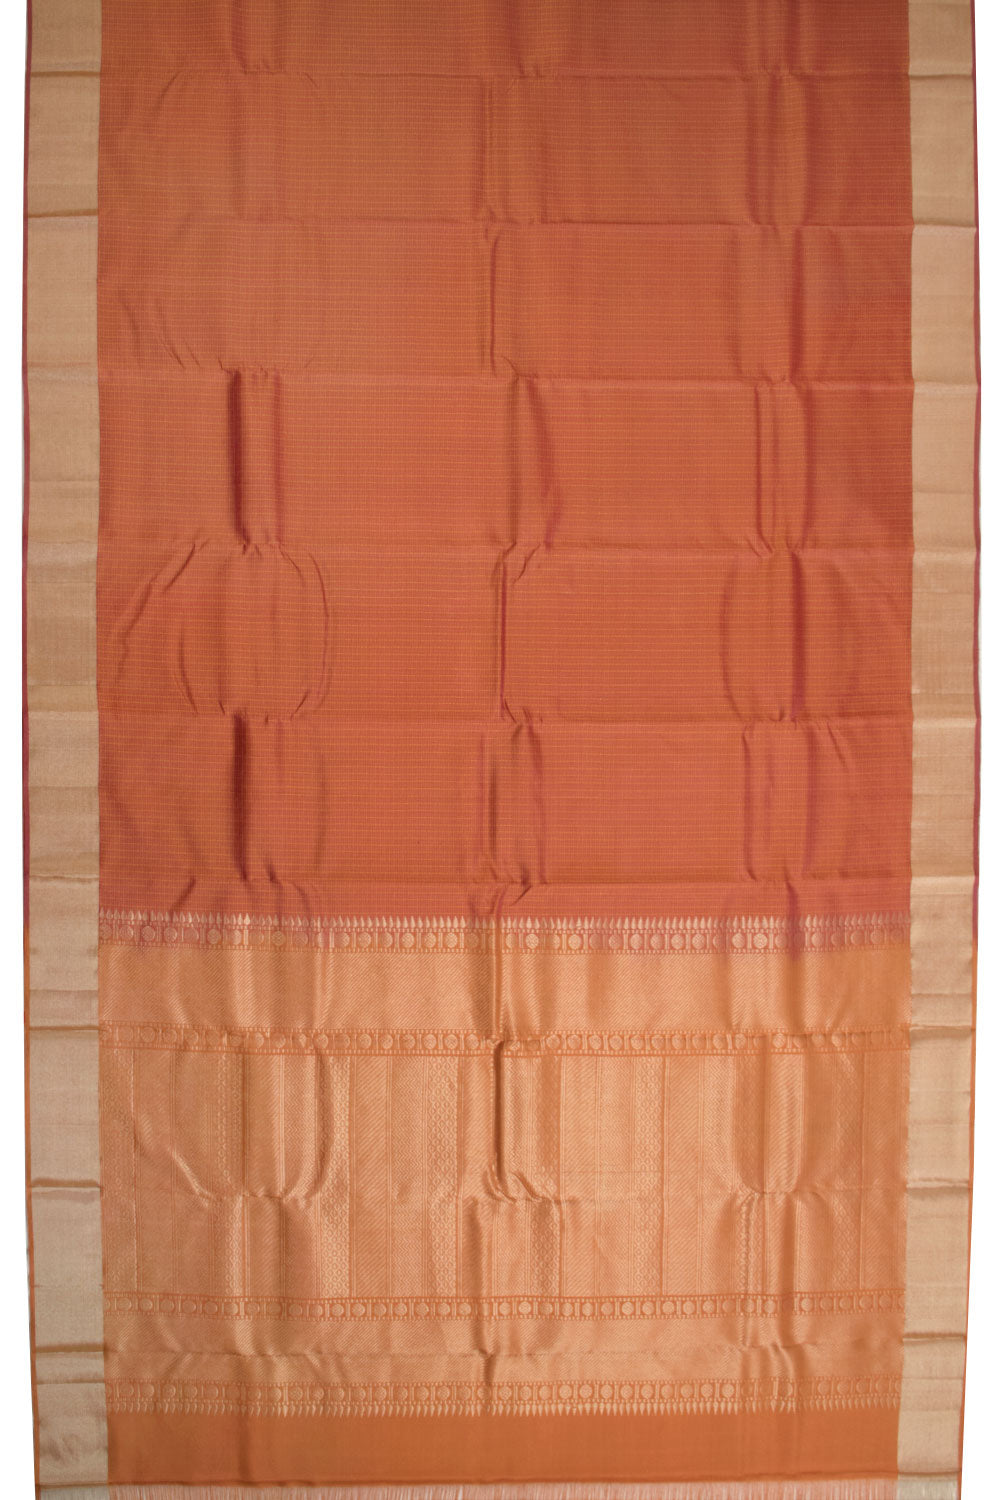 Brown Kovai Soft Silk Saree 10069007 - Avishya